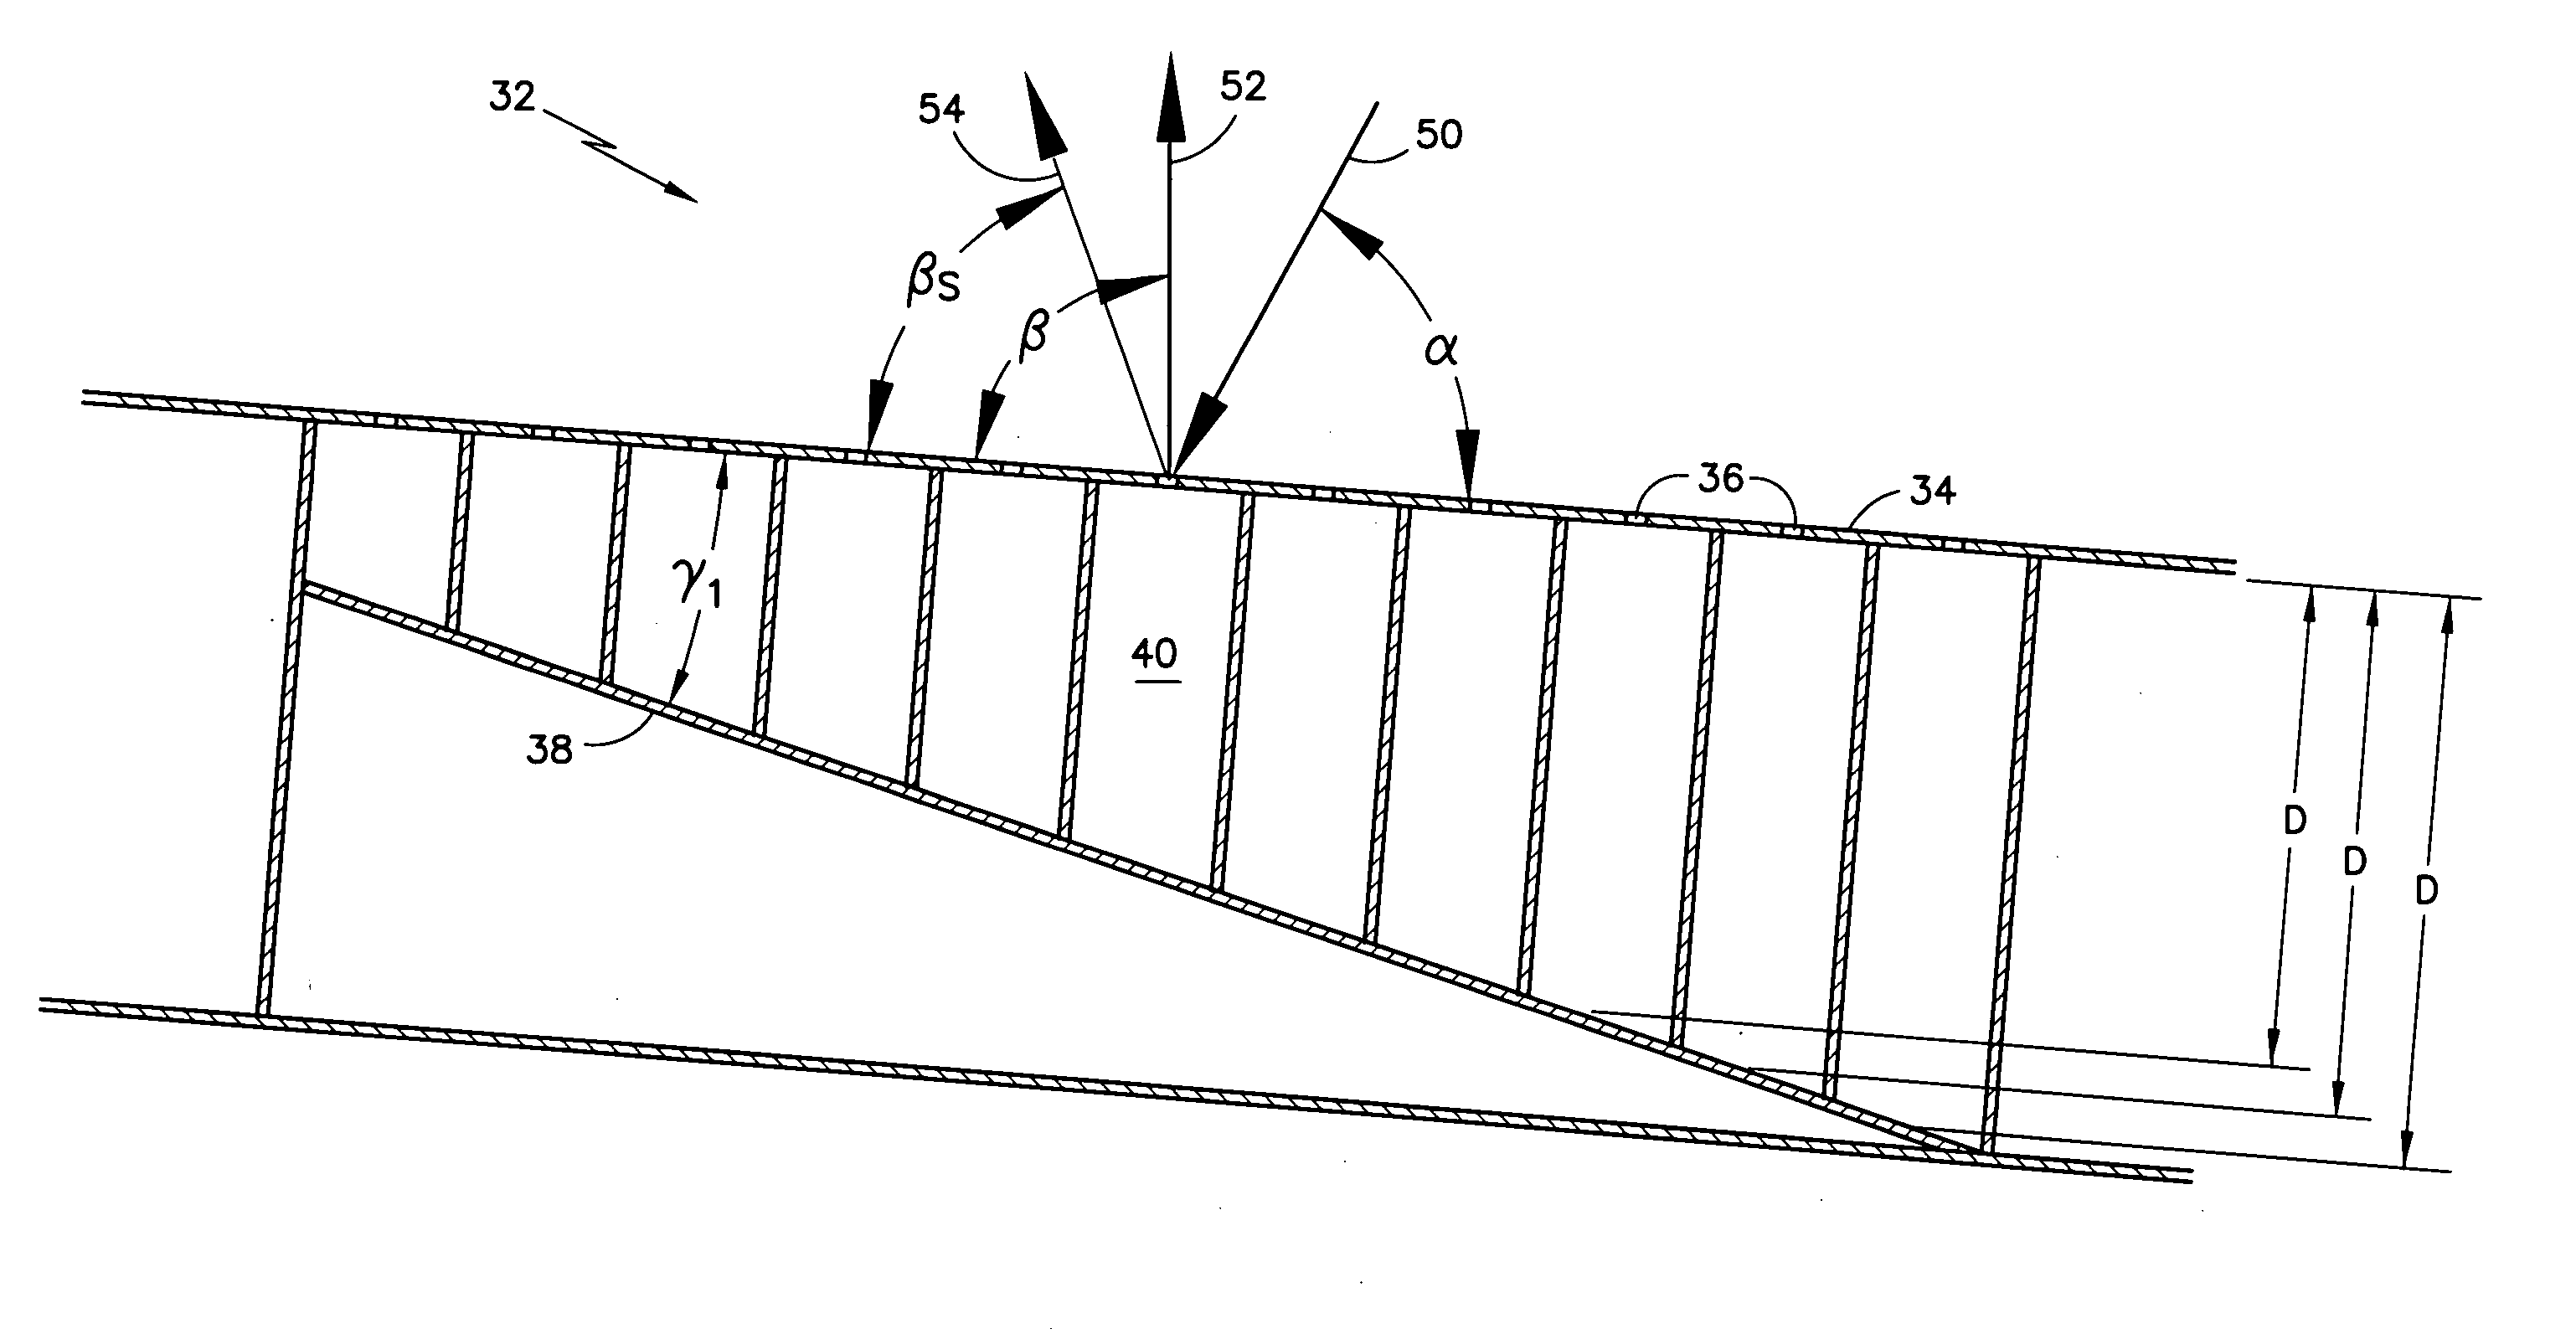 Acoustic liner with a nonuniform depth backwall